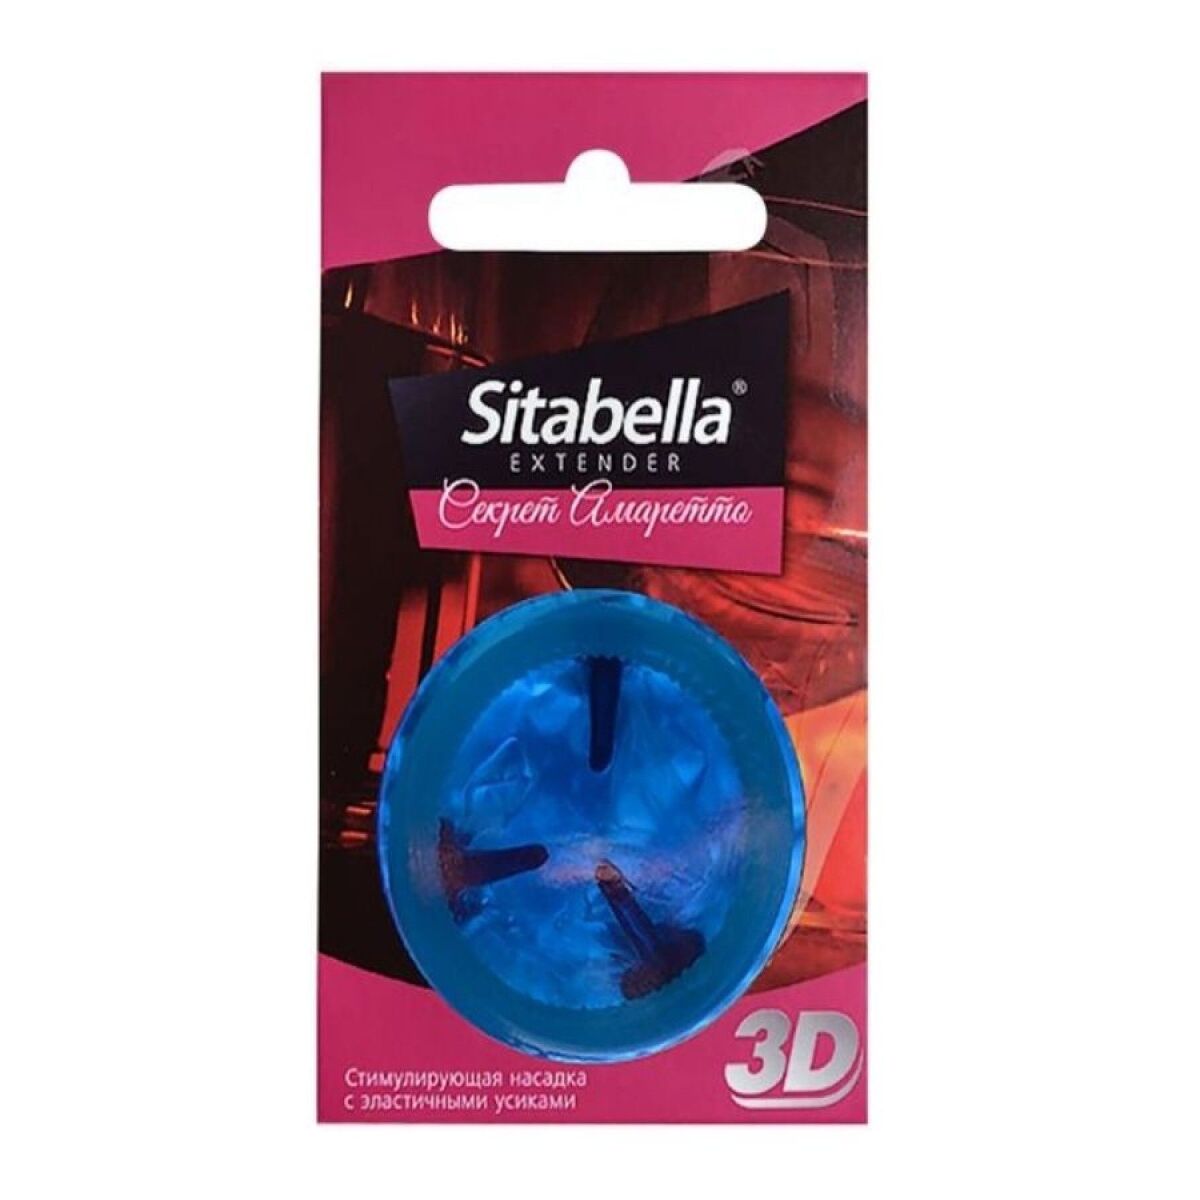 Sitabella 3D Secret Amaretto Prezervatif